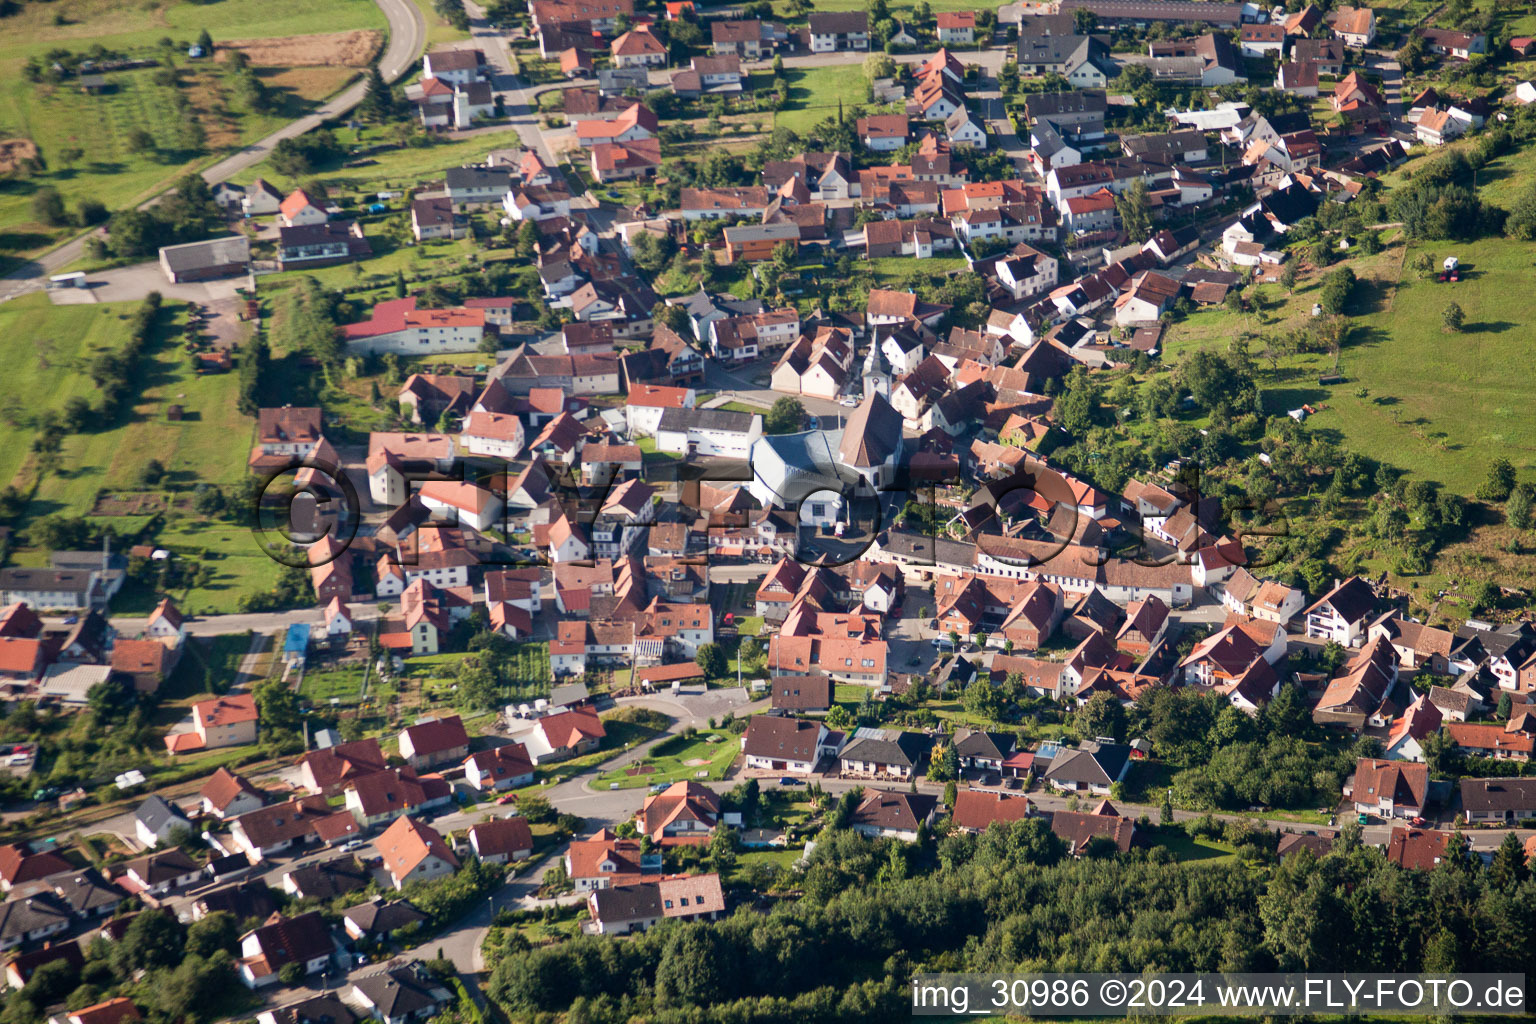 Aerial view of Gosserweiler stone in the district Gossersweiler in Gossersweiler-Stein in the state Rhineland-Palatinate, Germany